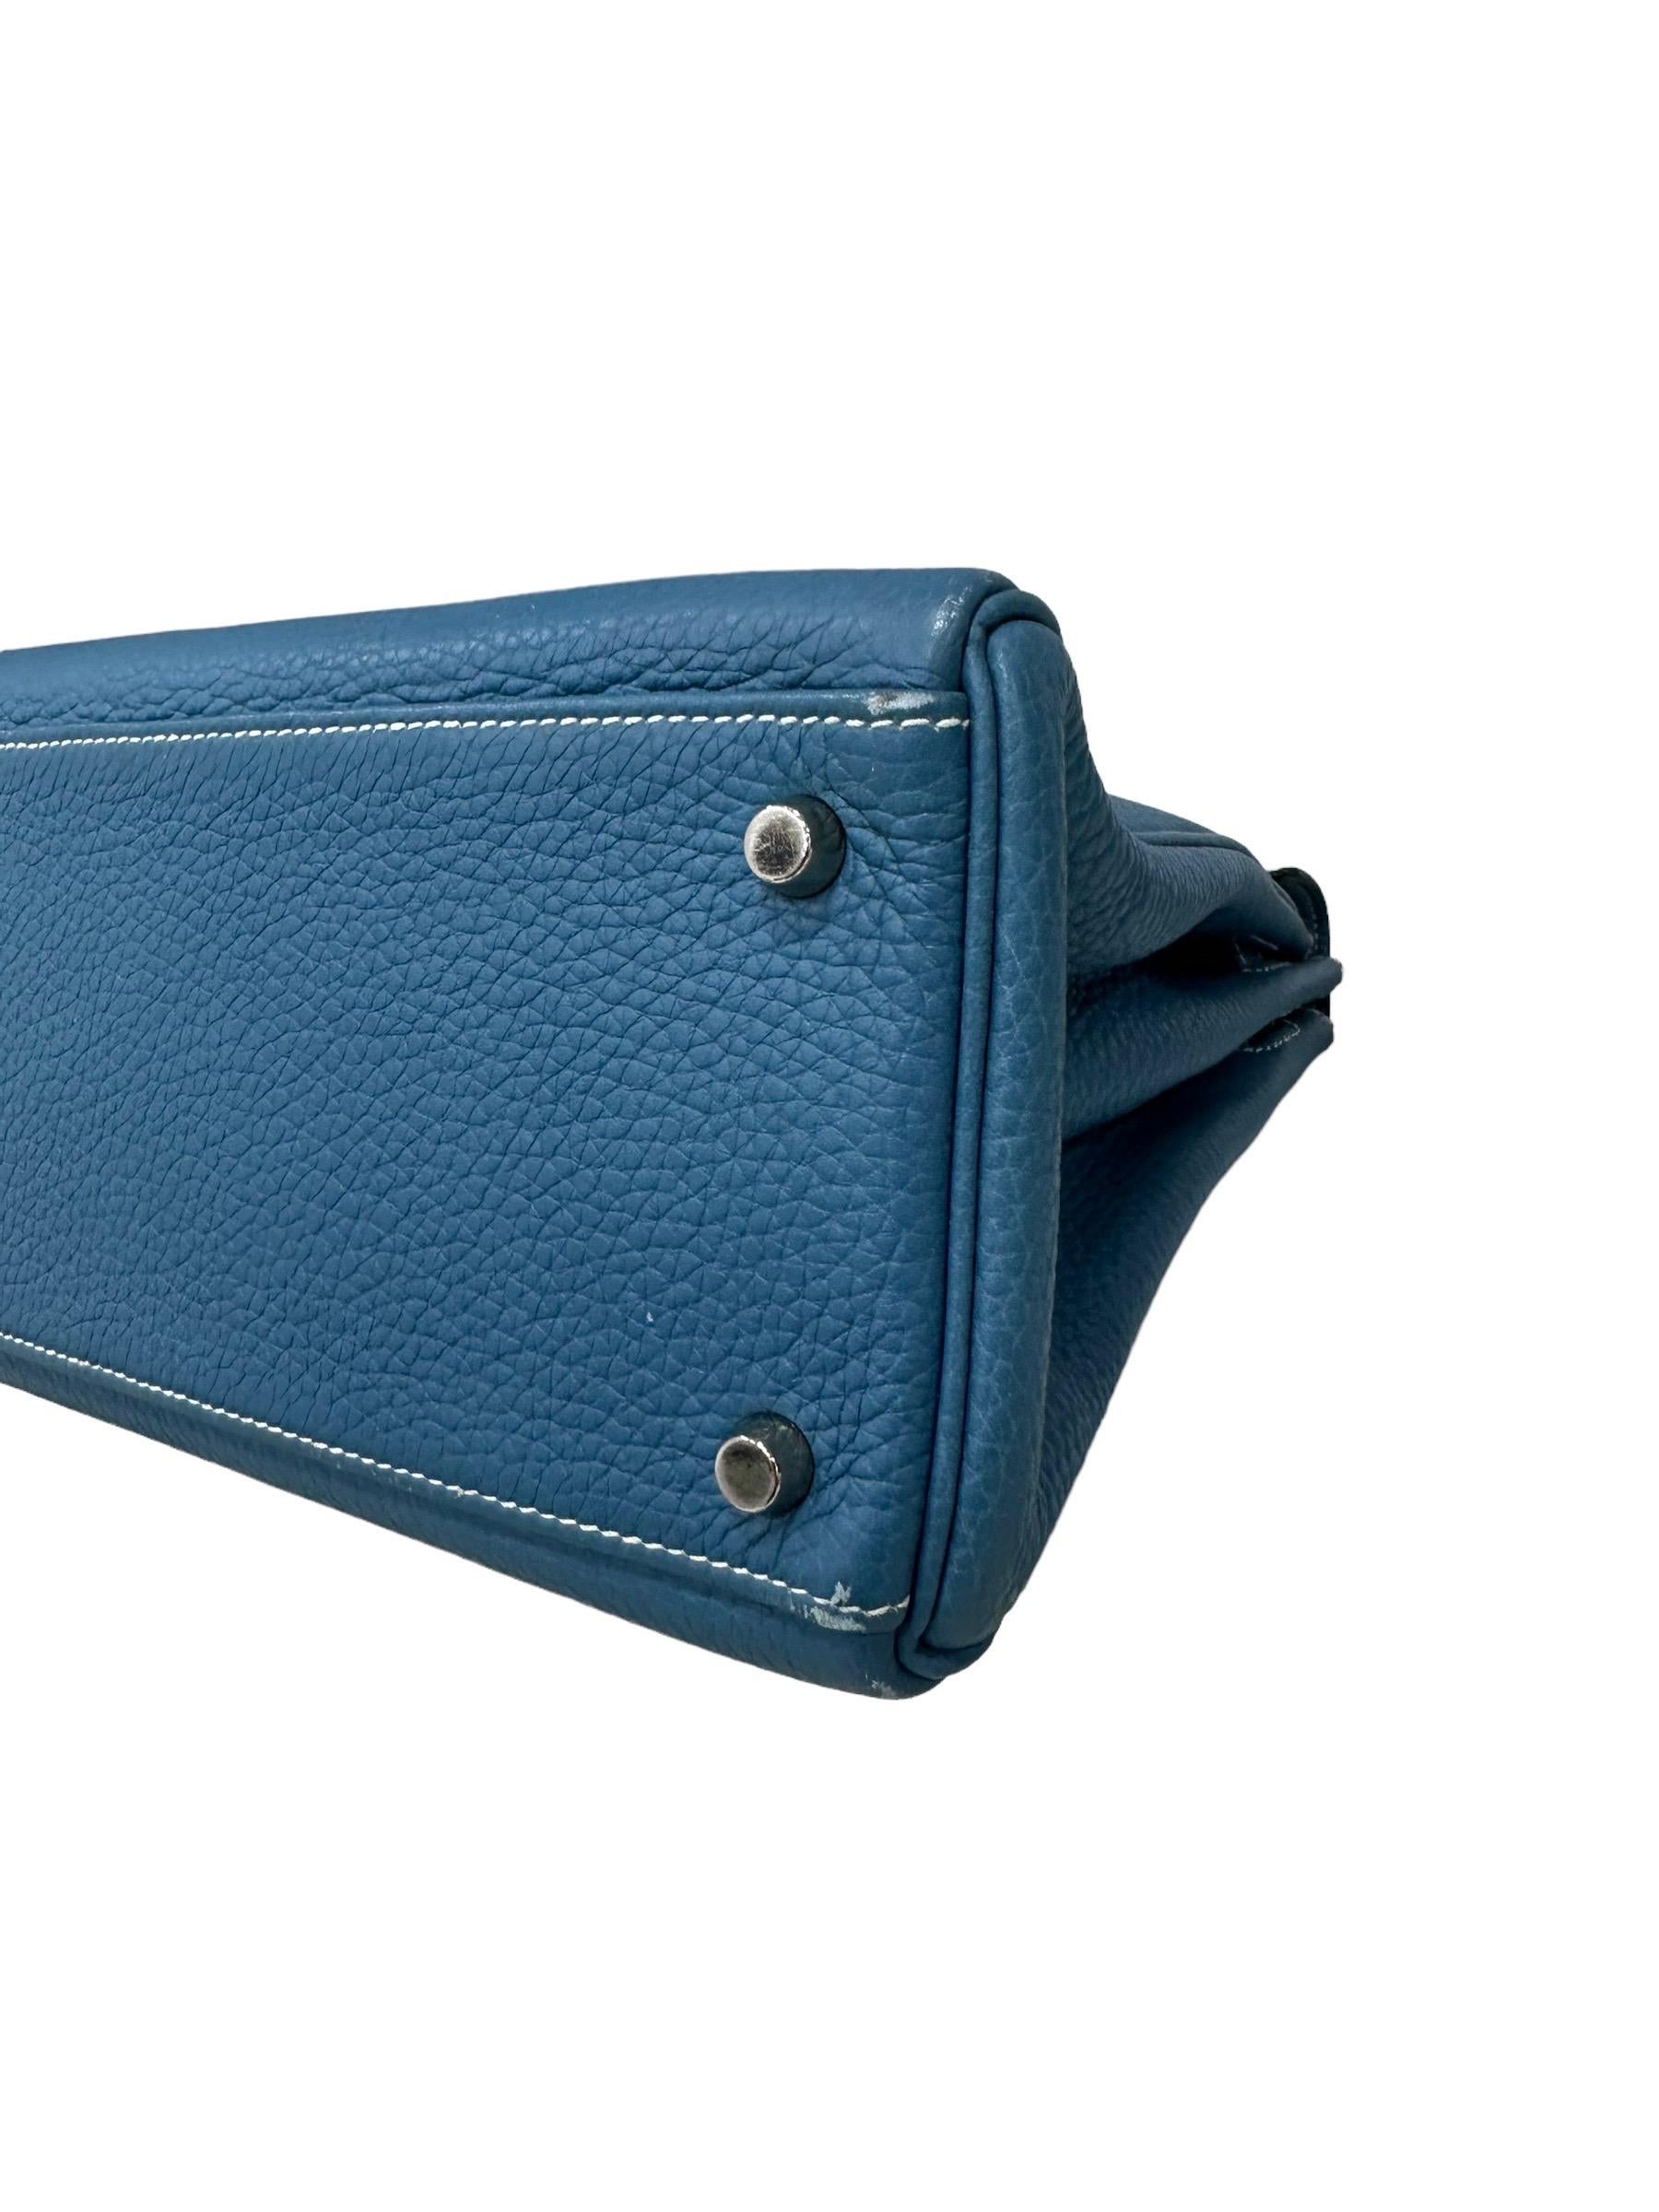 Hermès Kelly Bag 32 Clemence Leather Blue Izmir Top Handle Bag For Sale 6